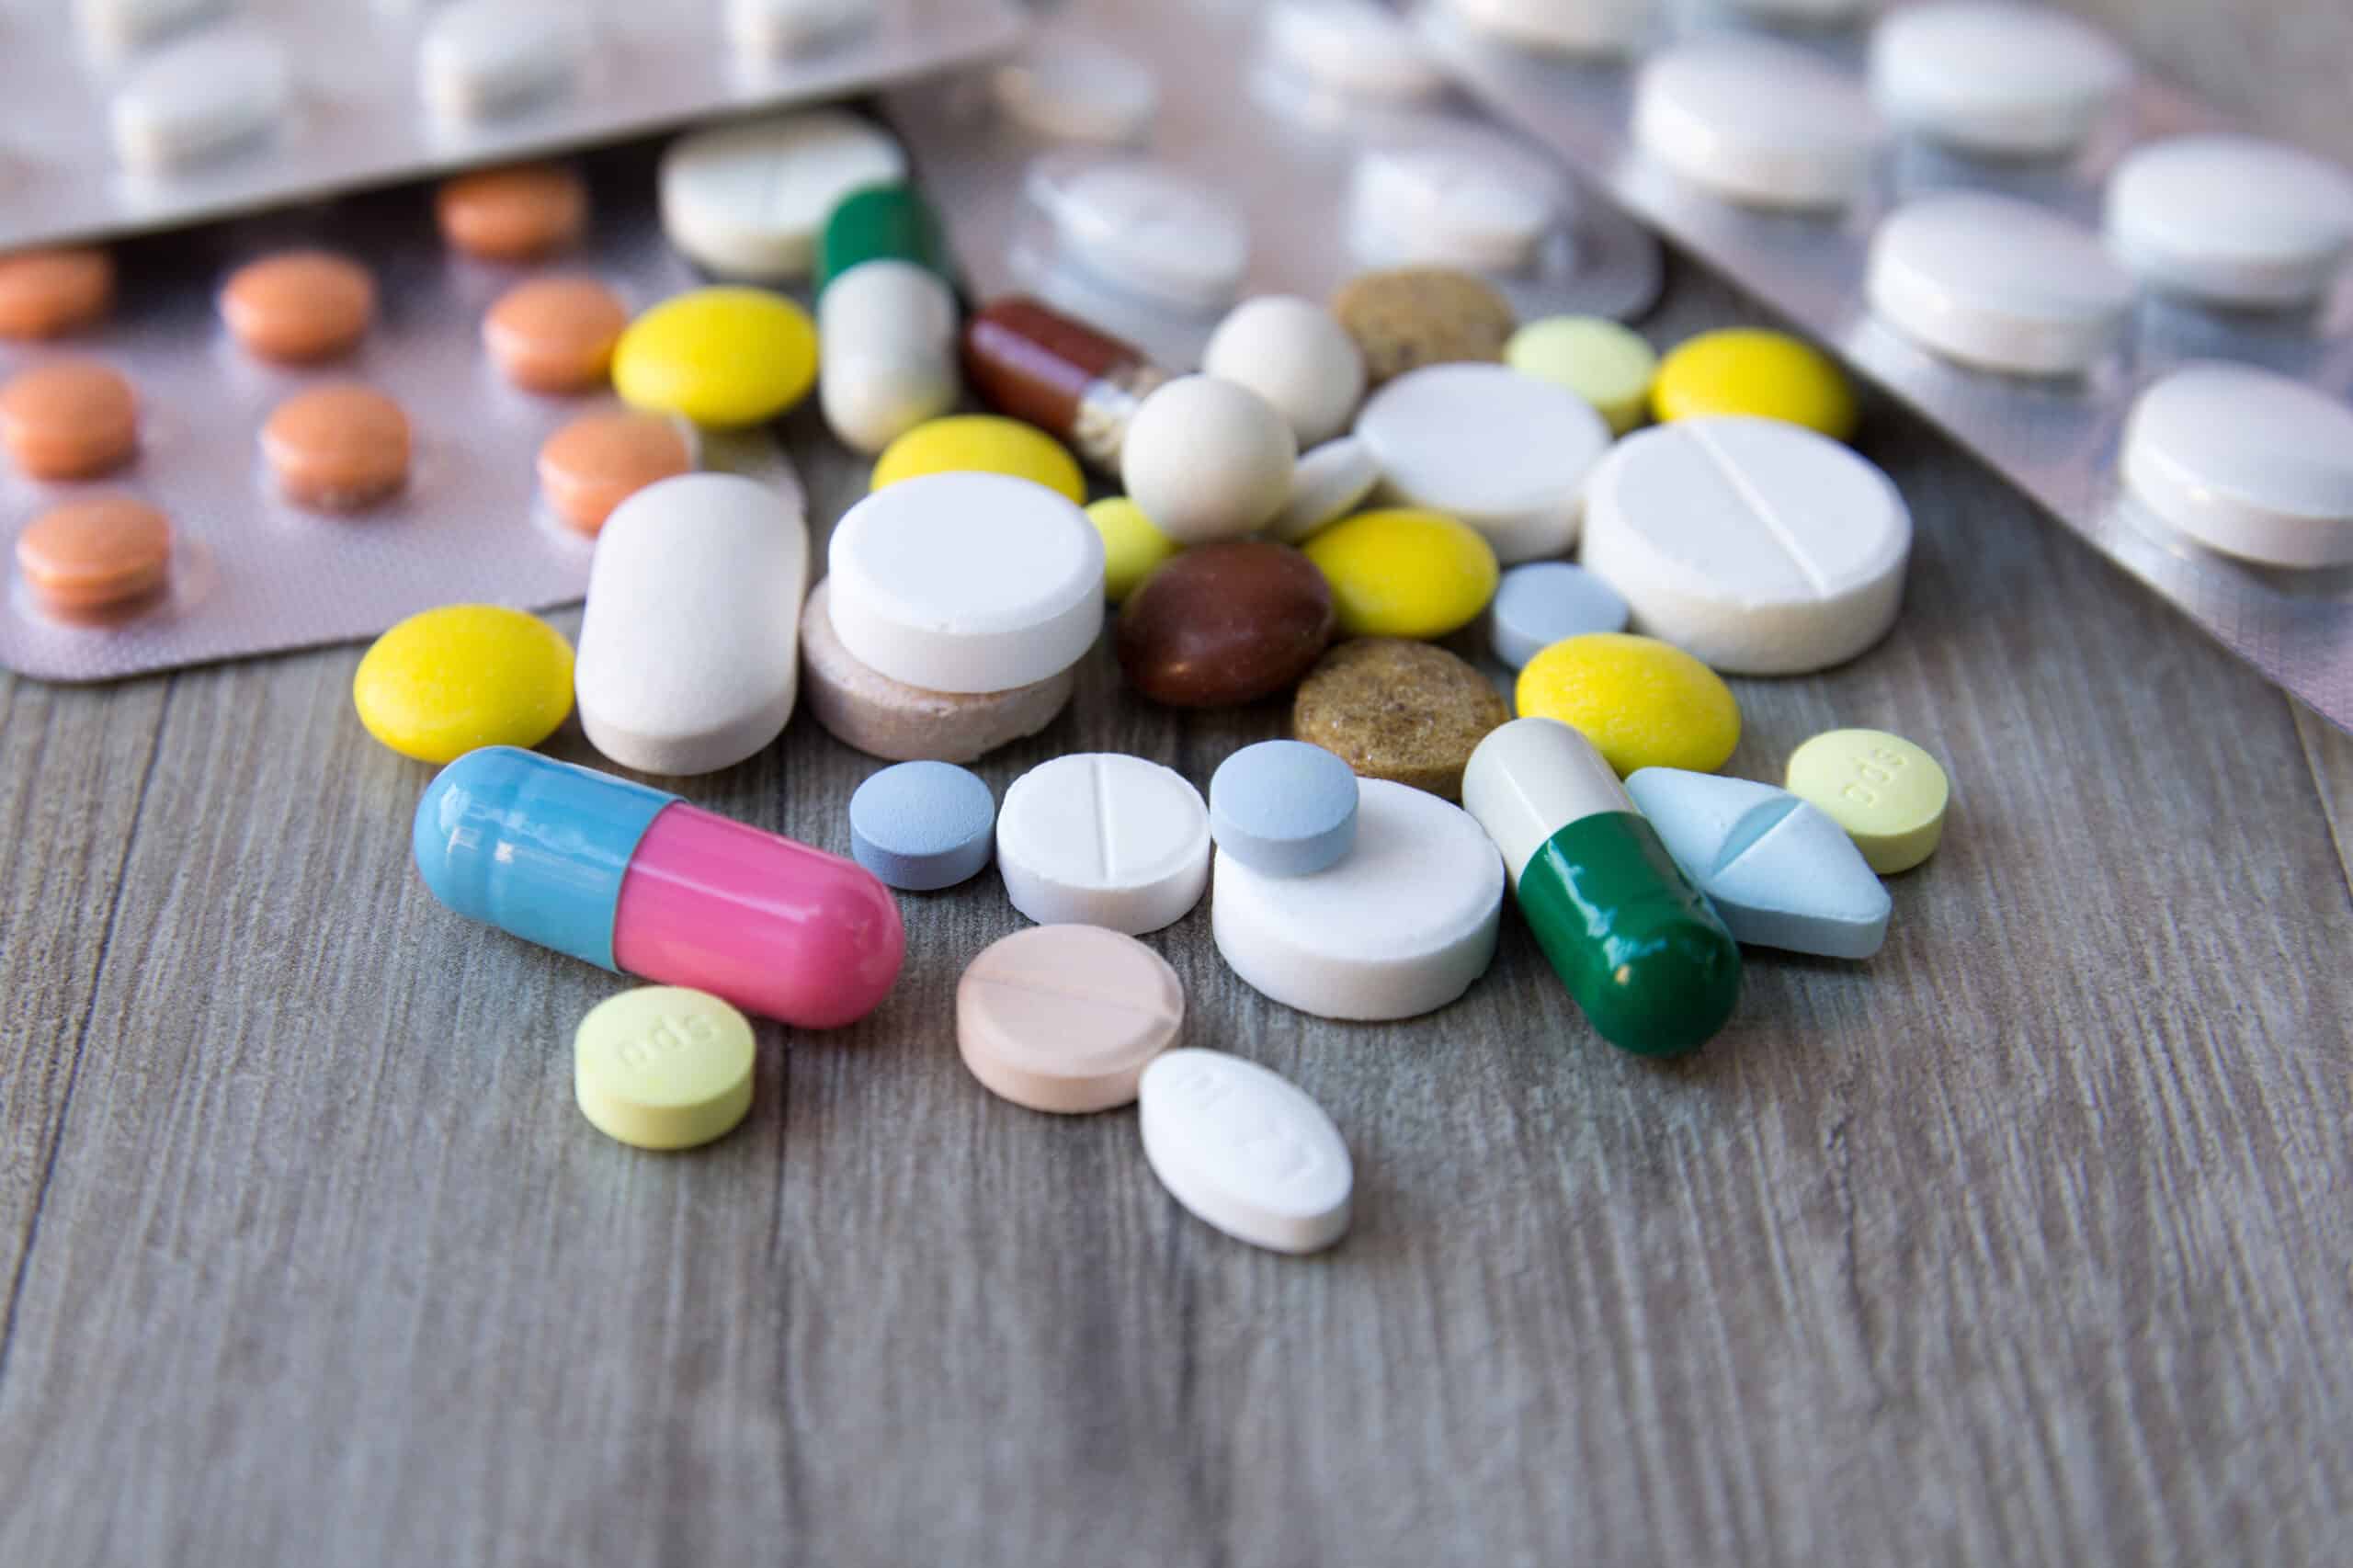 How Prescription Drug Addiction Starts